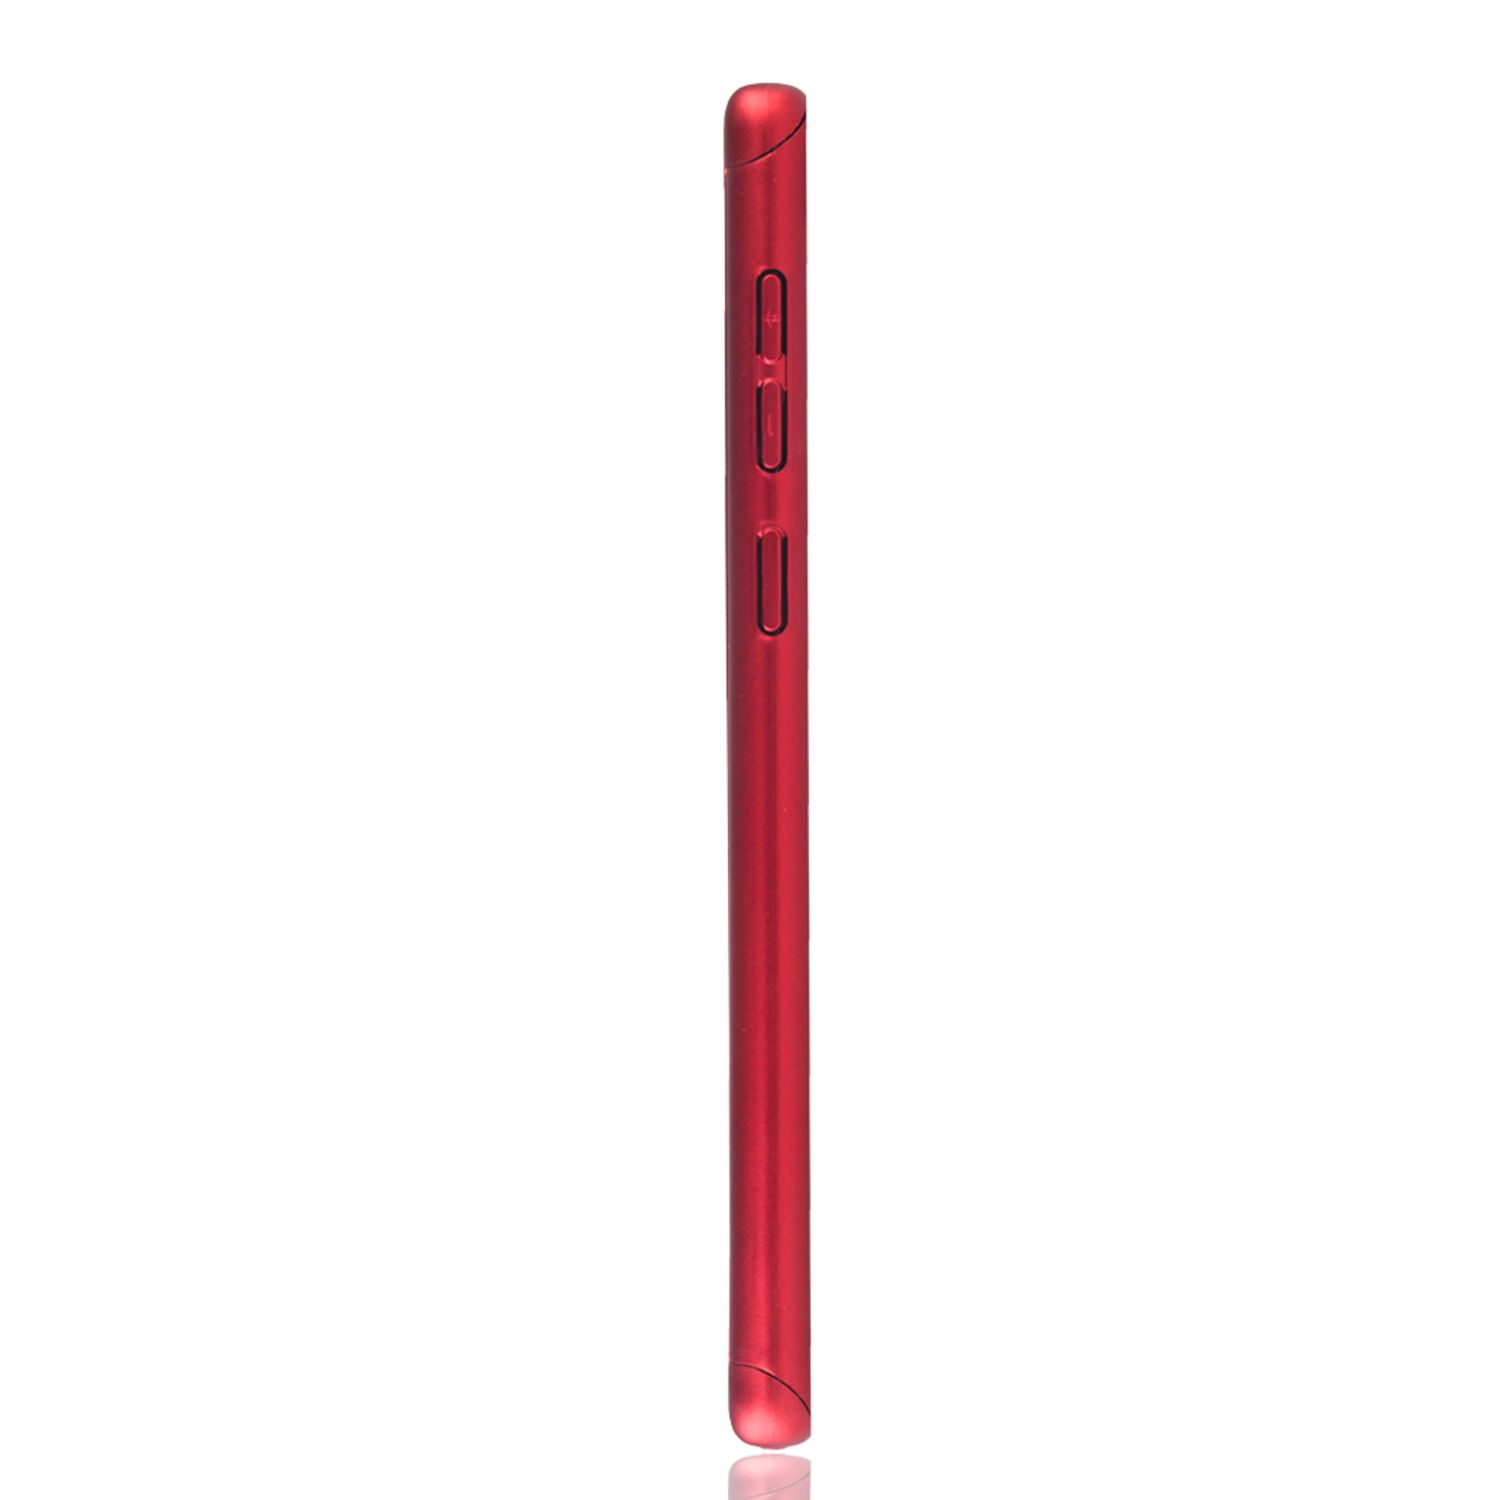 KÖNIG DESIGN Note Samsung, Rot 9, Galaxy Cover, Full Schutzhülle